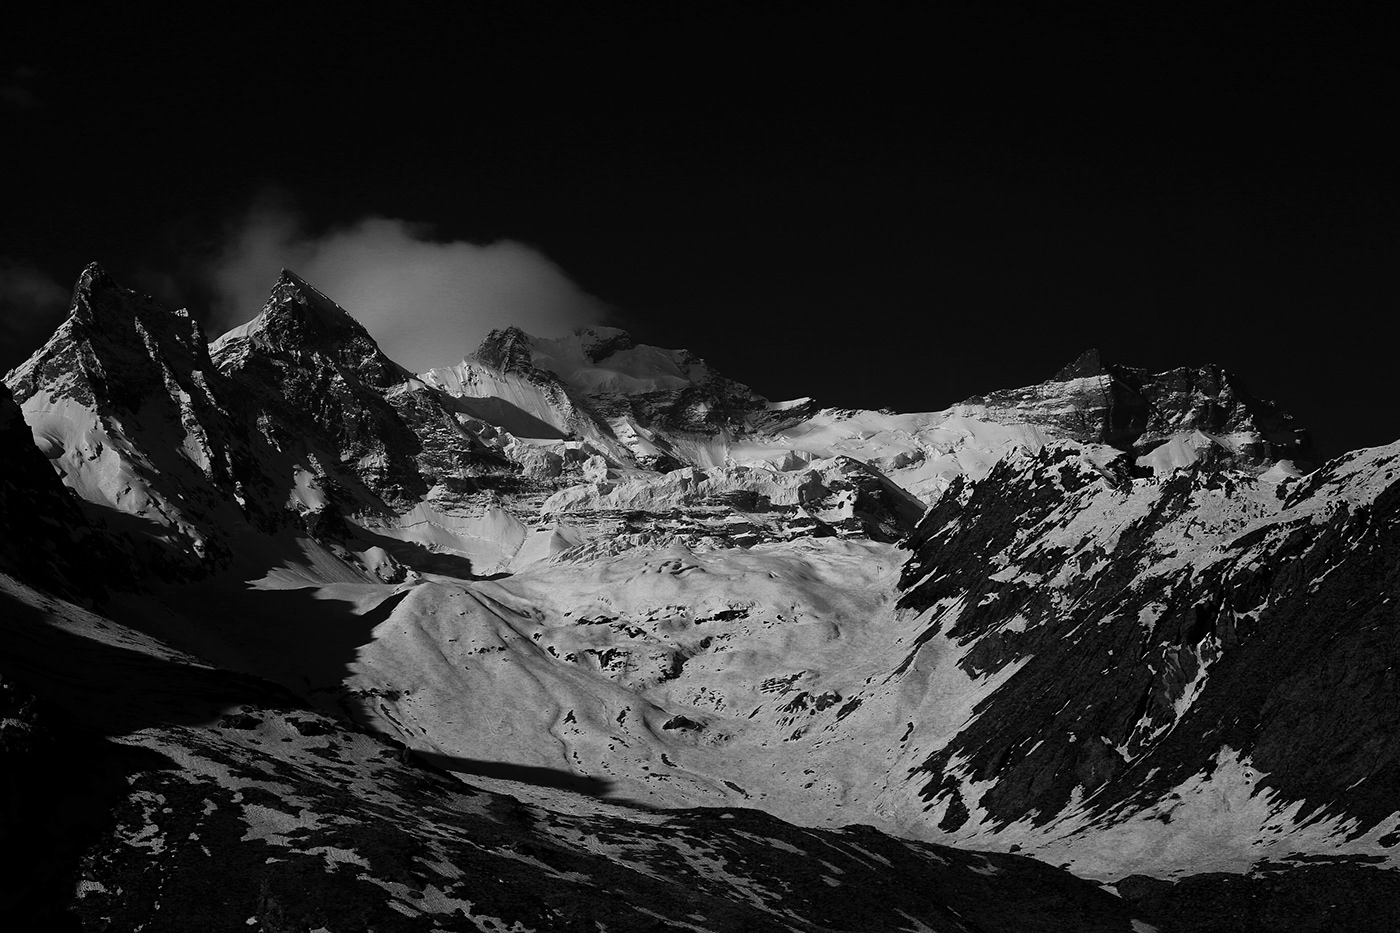 Landscape landscape photography India himalaya snow hills mountain monochrome contrast